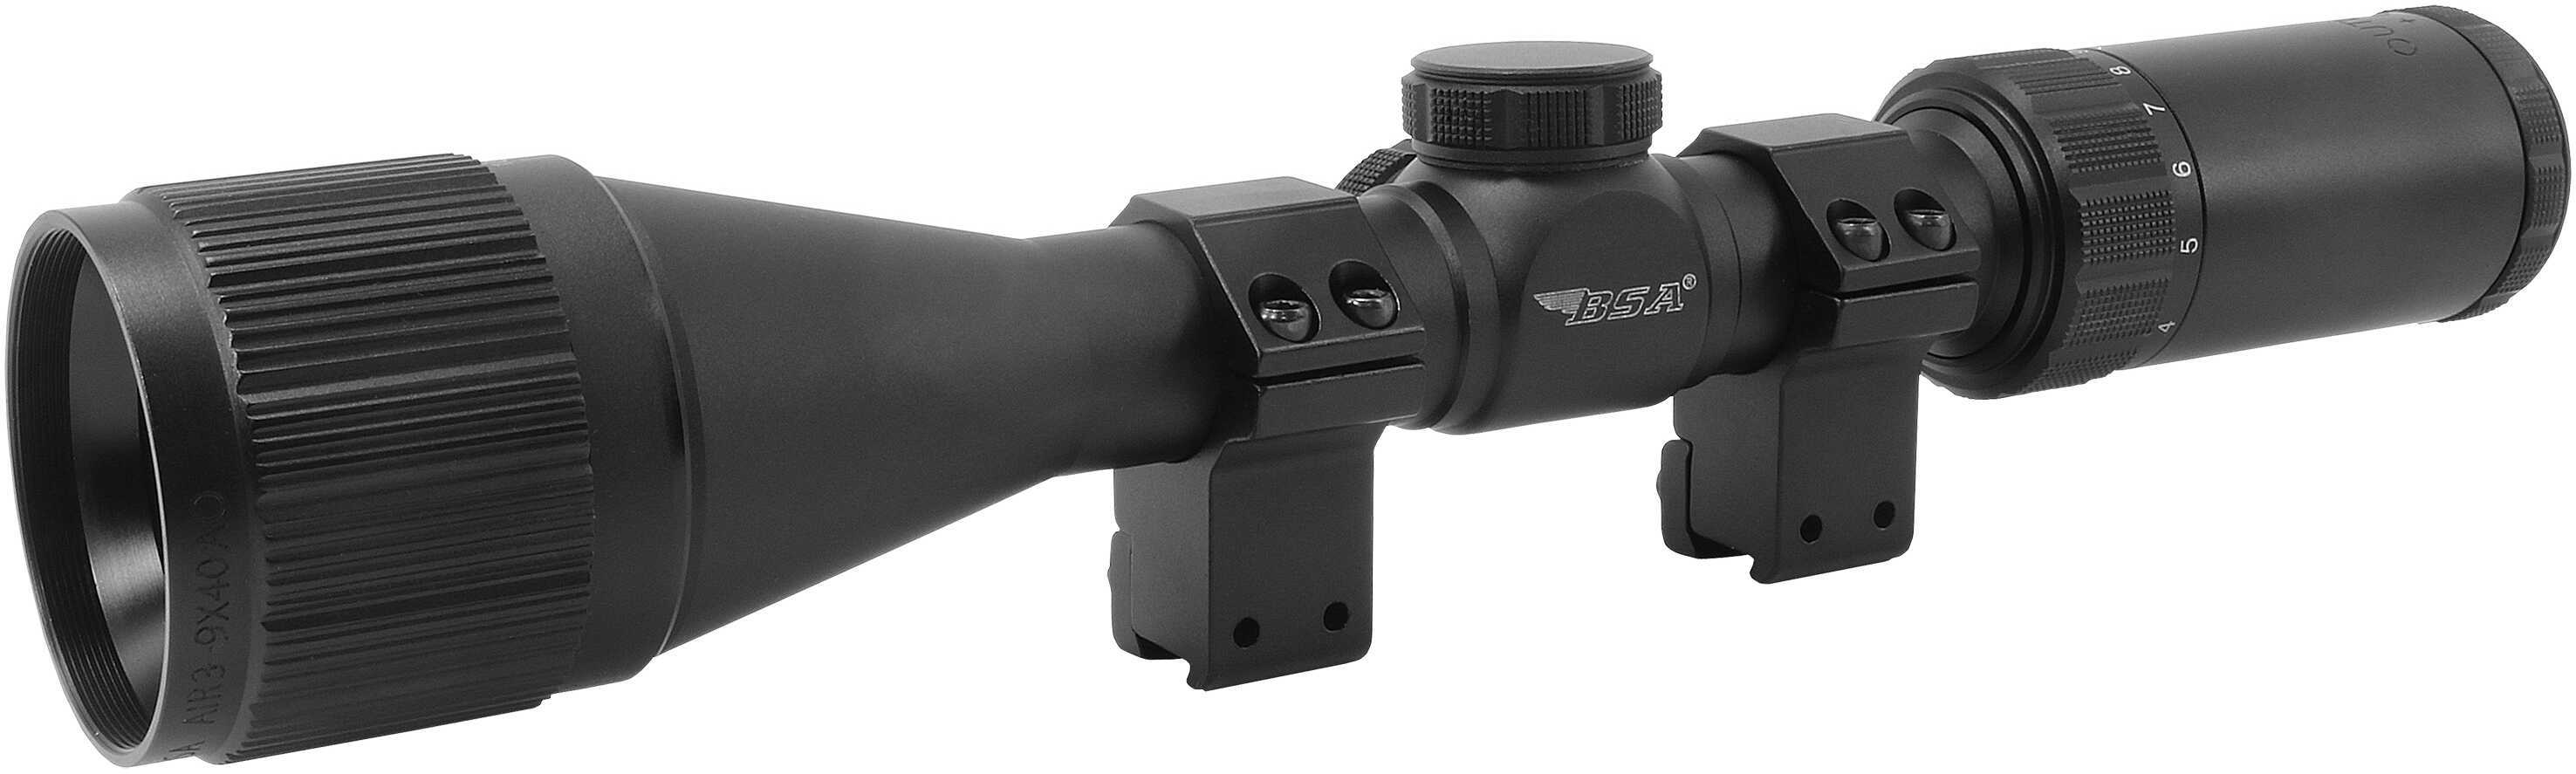 BSA Optics Outlook Rifle Scope 3-9X40mm Mil Dot Reticle 1" Main Tube 1/4 MOA Matte Finish Black AIR3-9X40AOTB